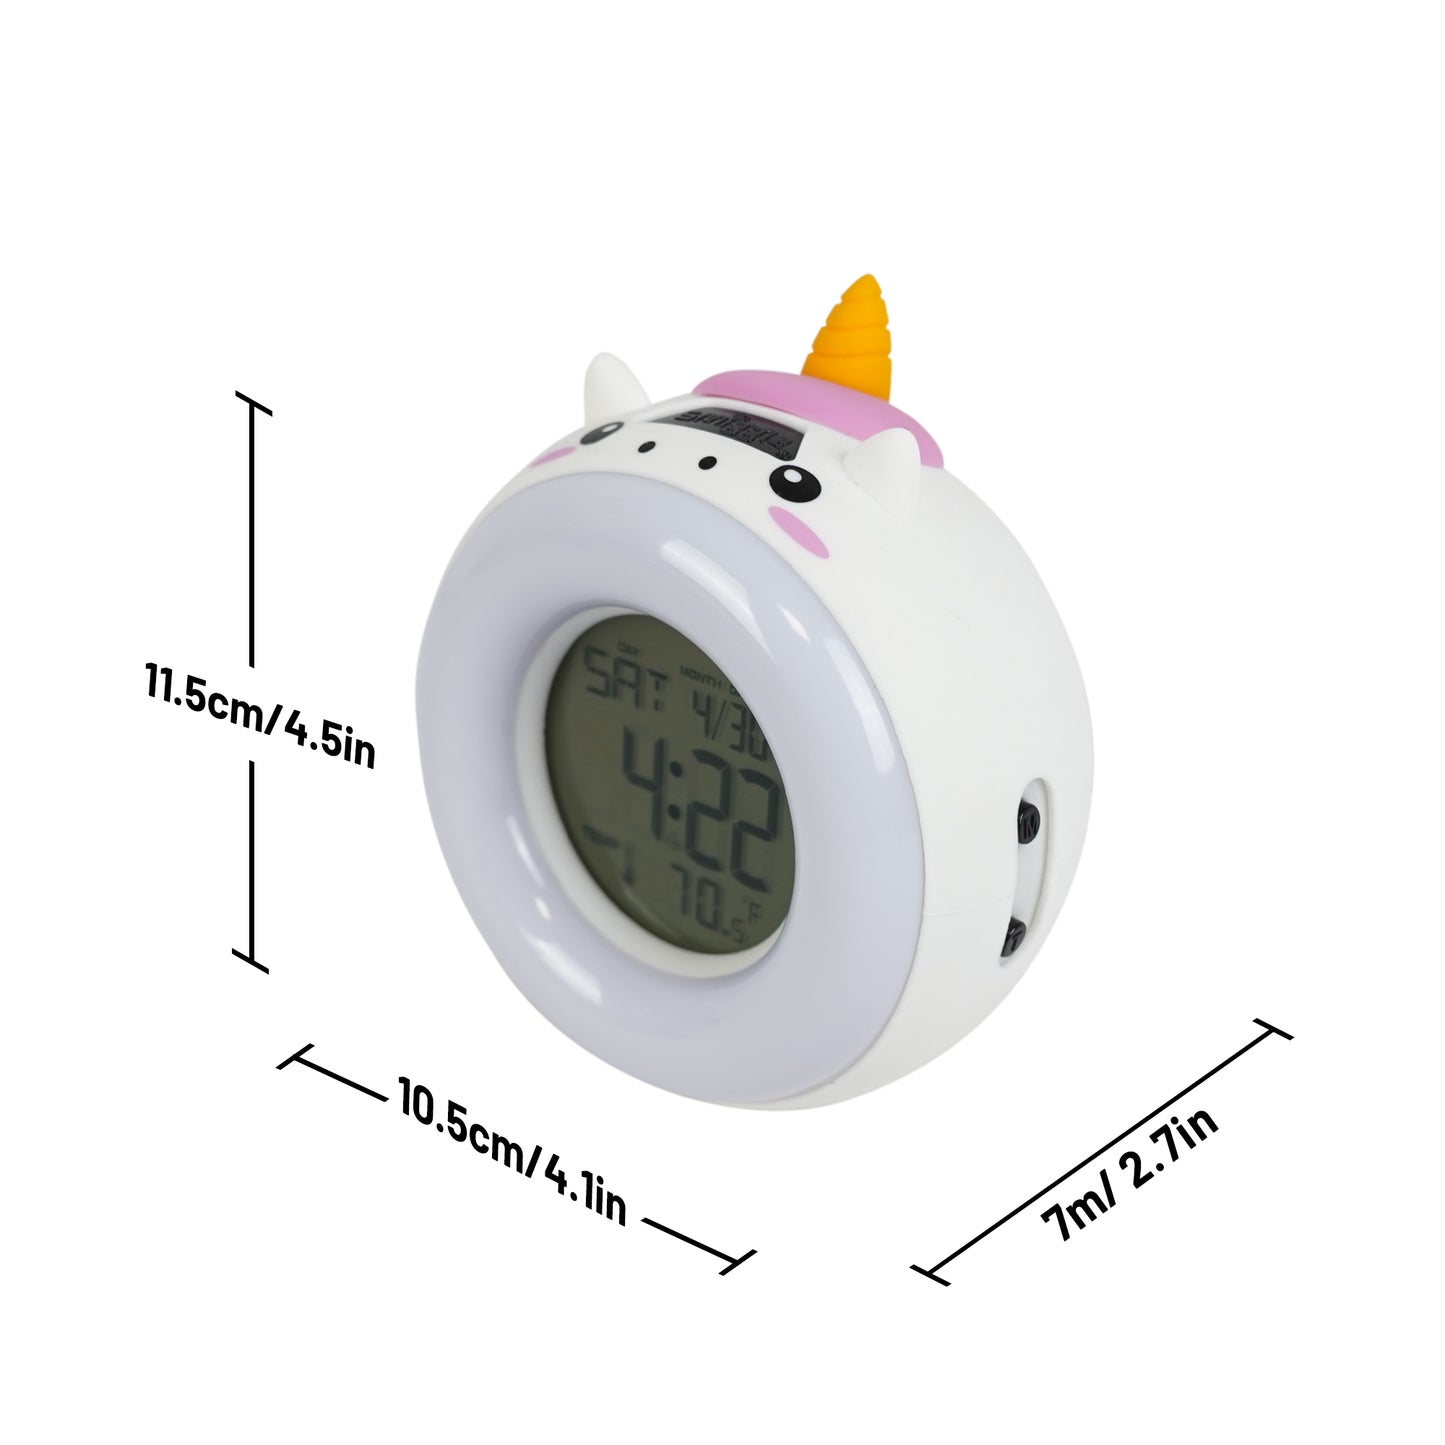 YOBRO Unicorn LED Clock WSG12514